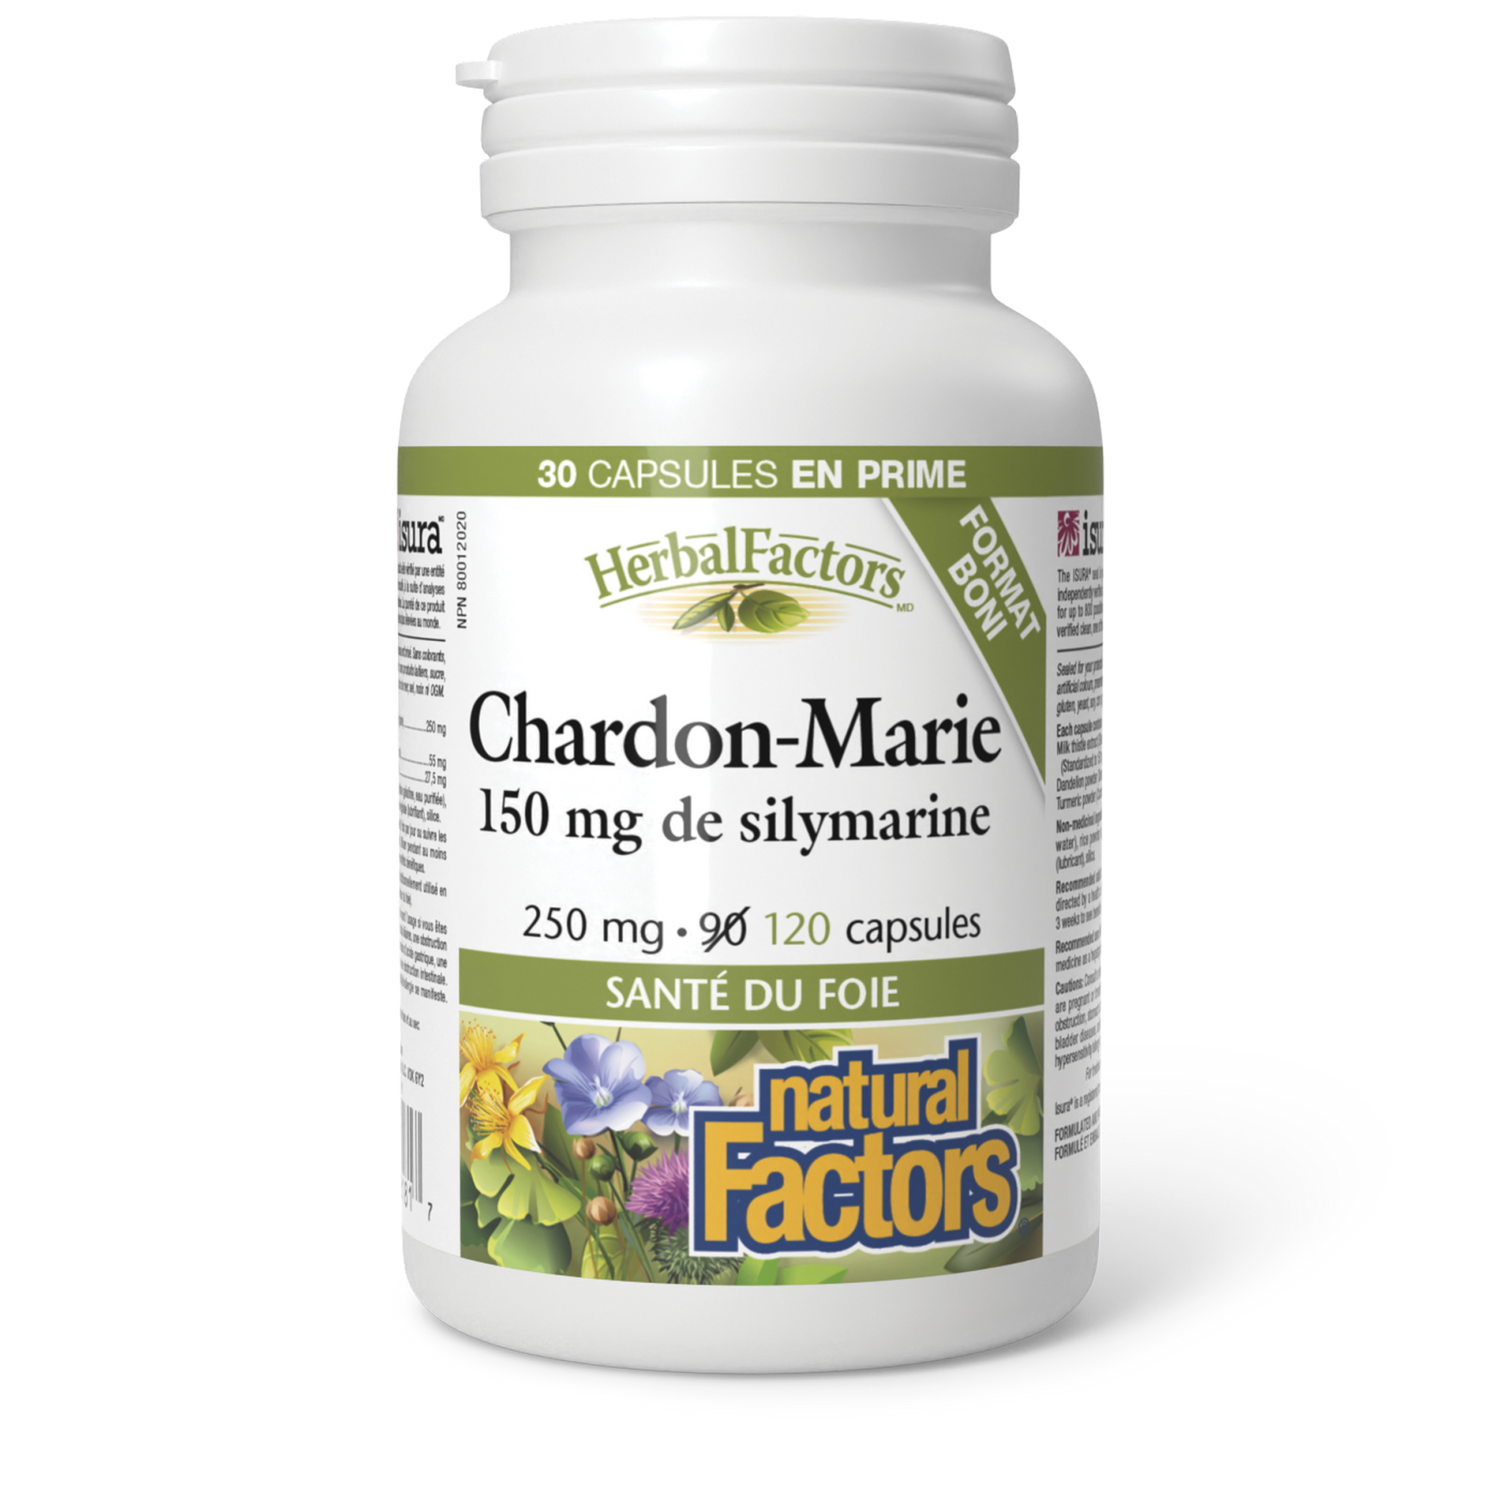 Chardon-Marie 250 mg/150 mg de silymarine, HerbalFactors, Natural Factors|v|image|8181